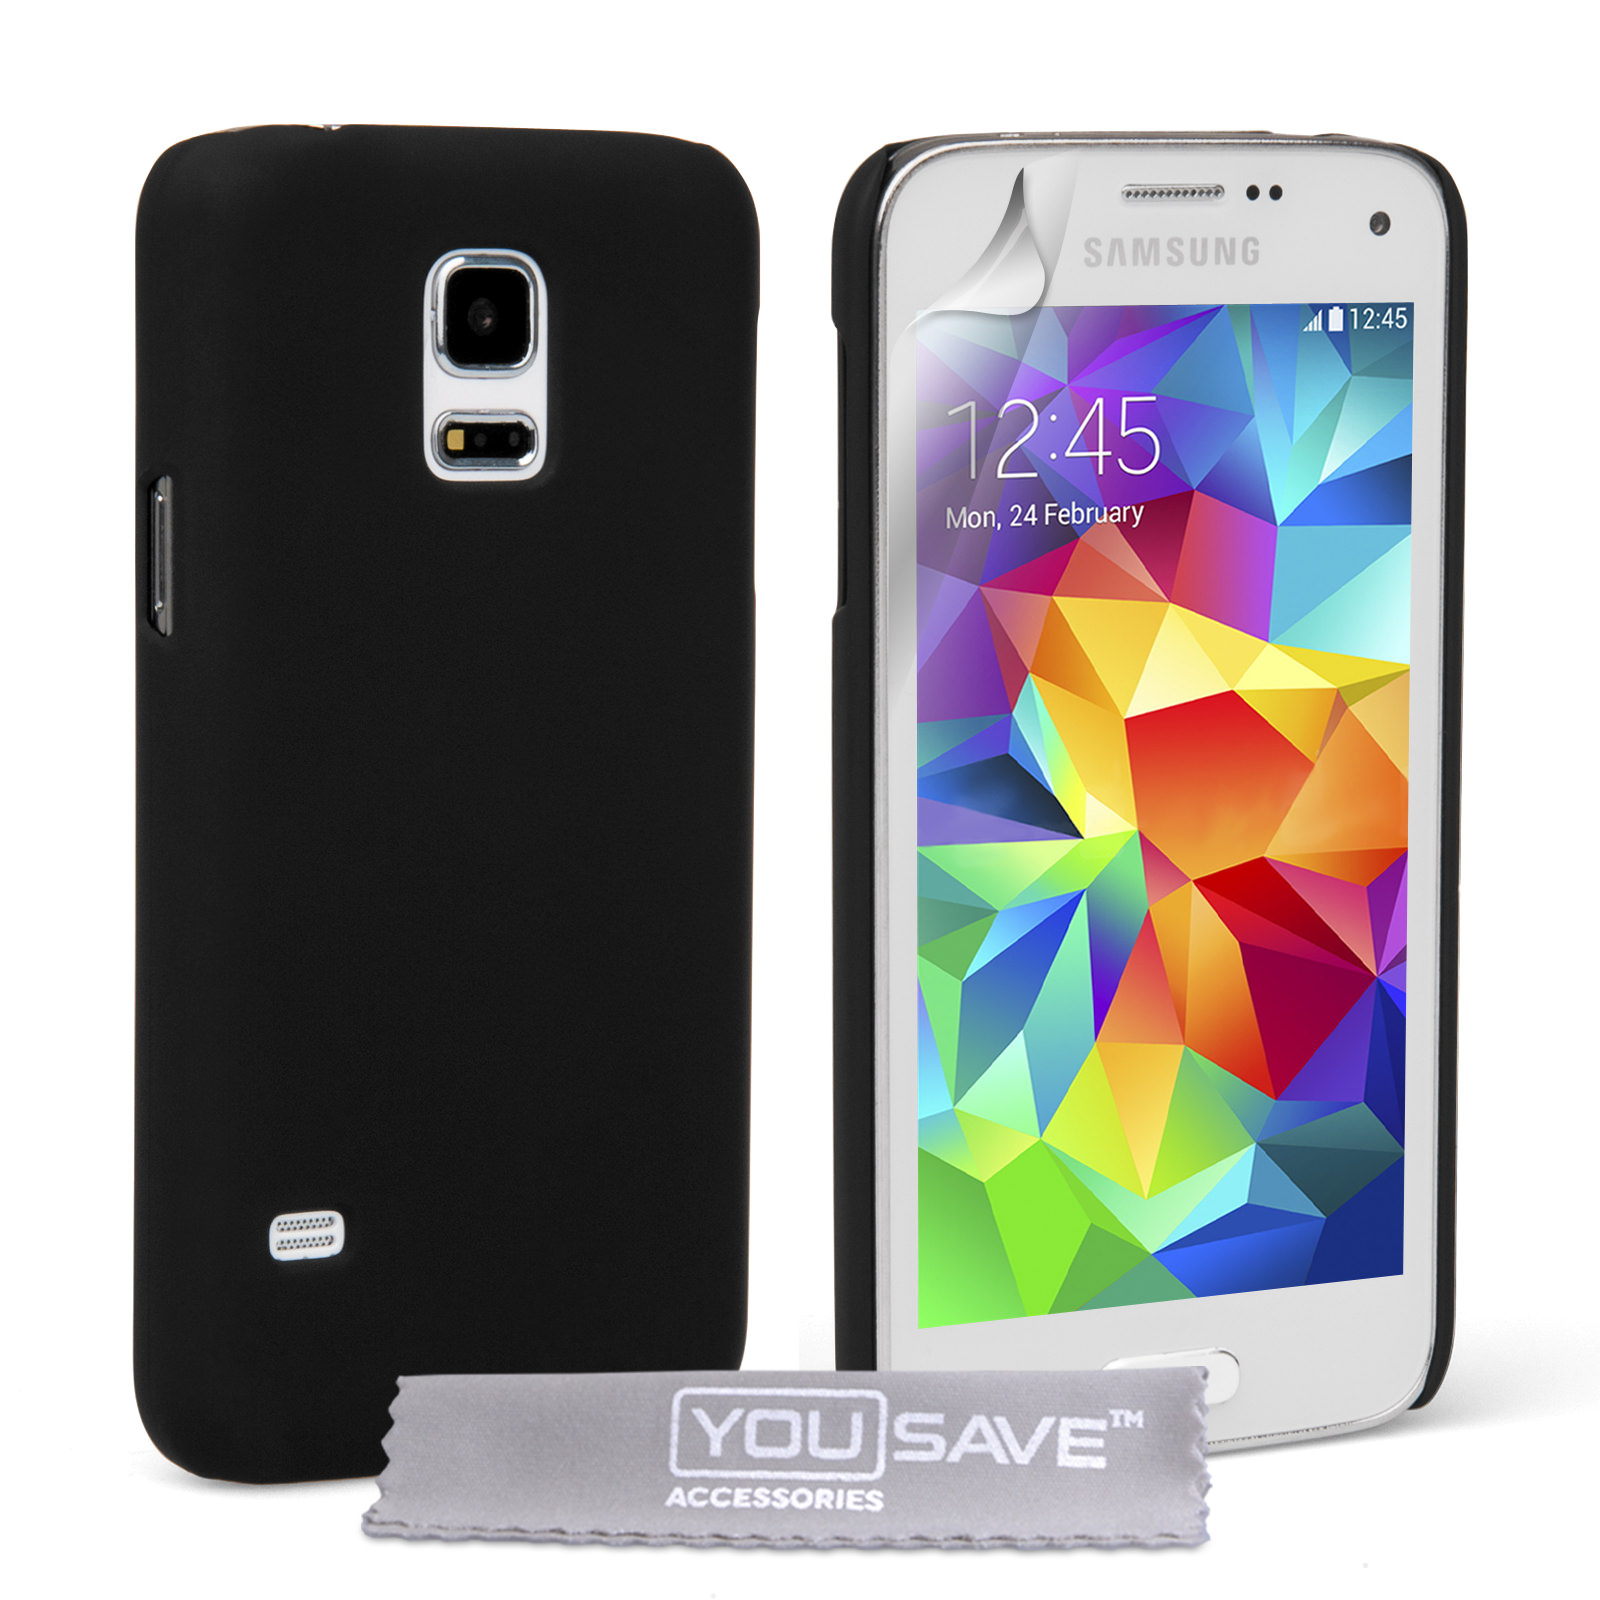 YouSave Accessories Samsung Galaxy S5 Mini Hard Hybrid Case - Black